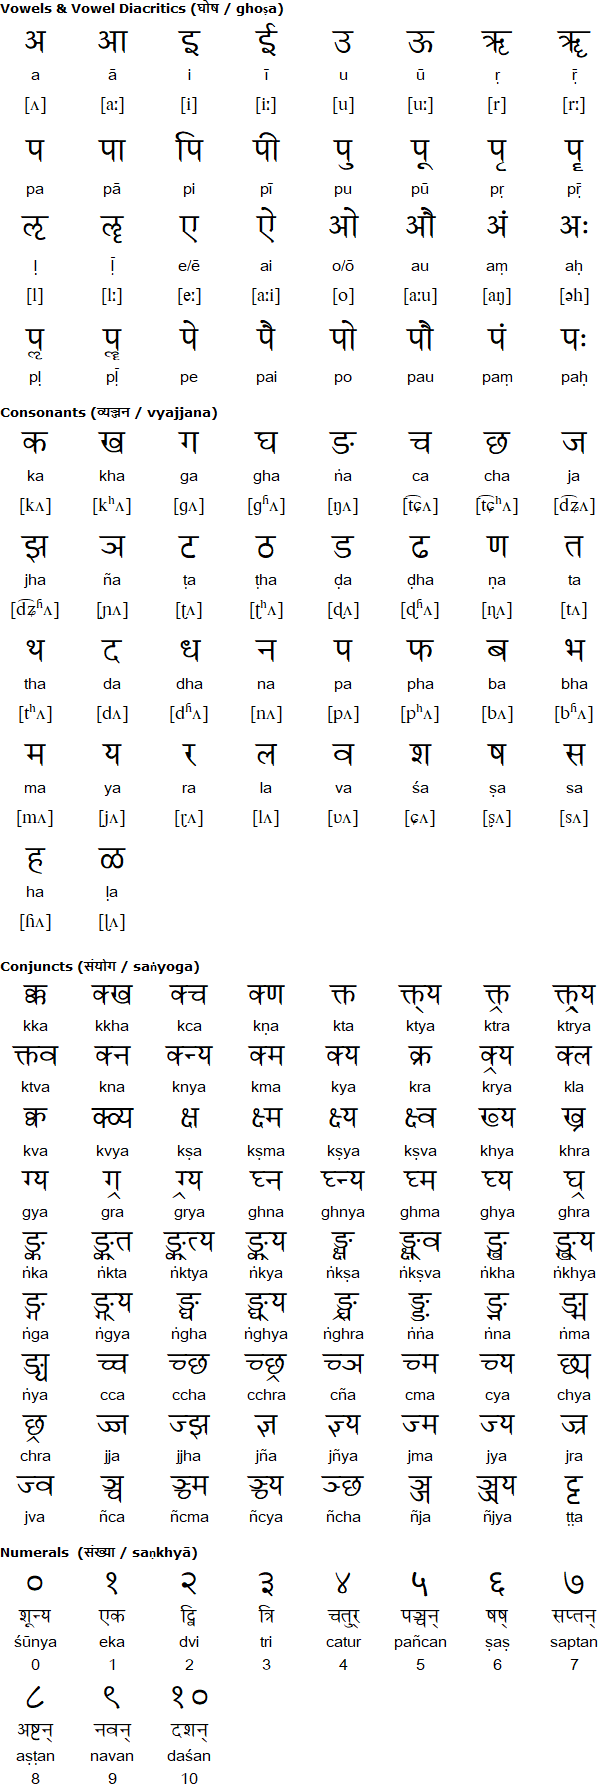 Sanskrit Varnamala Chart With Pictures Pdf